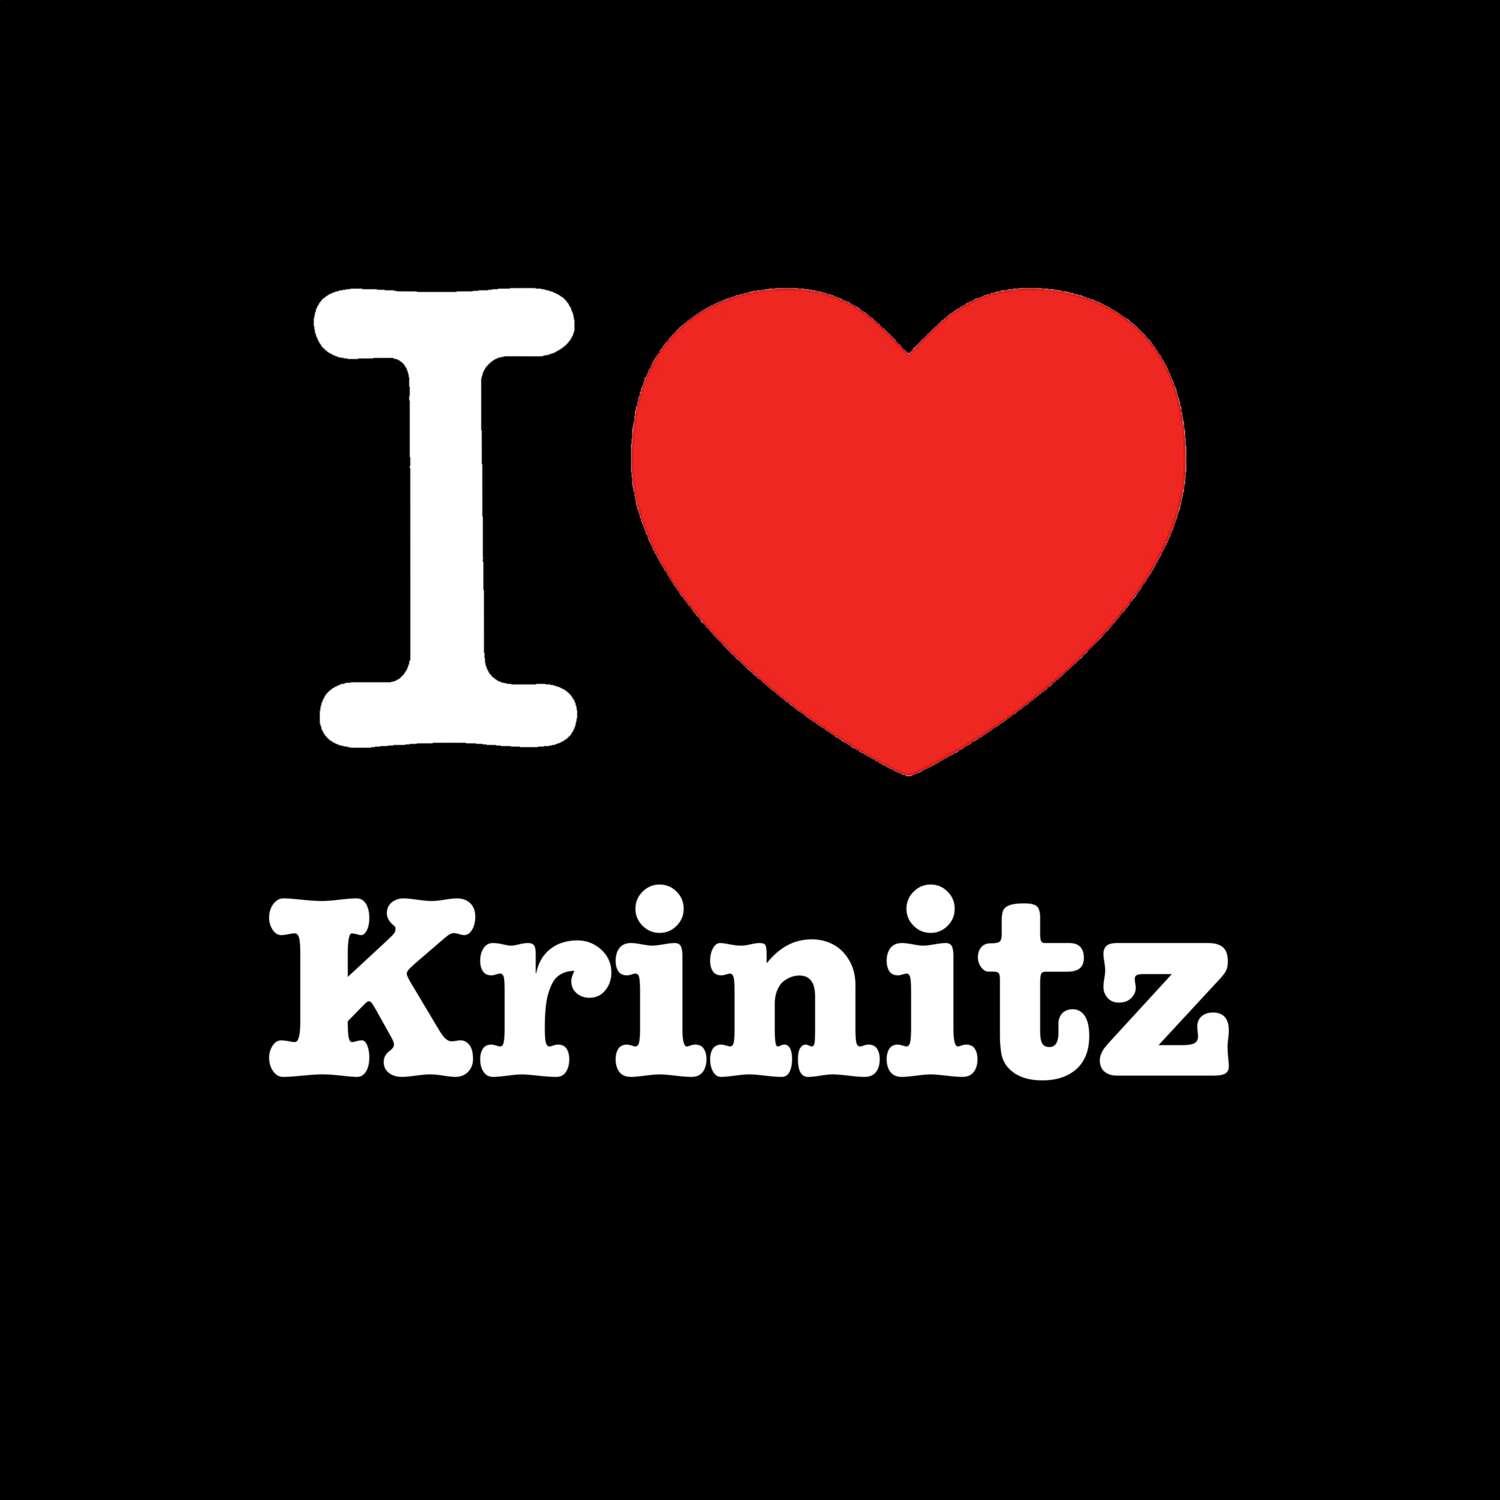 Krinitz T-Shirt »I love«